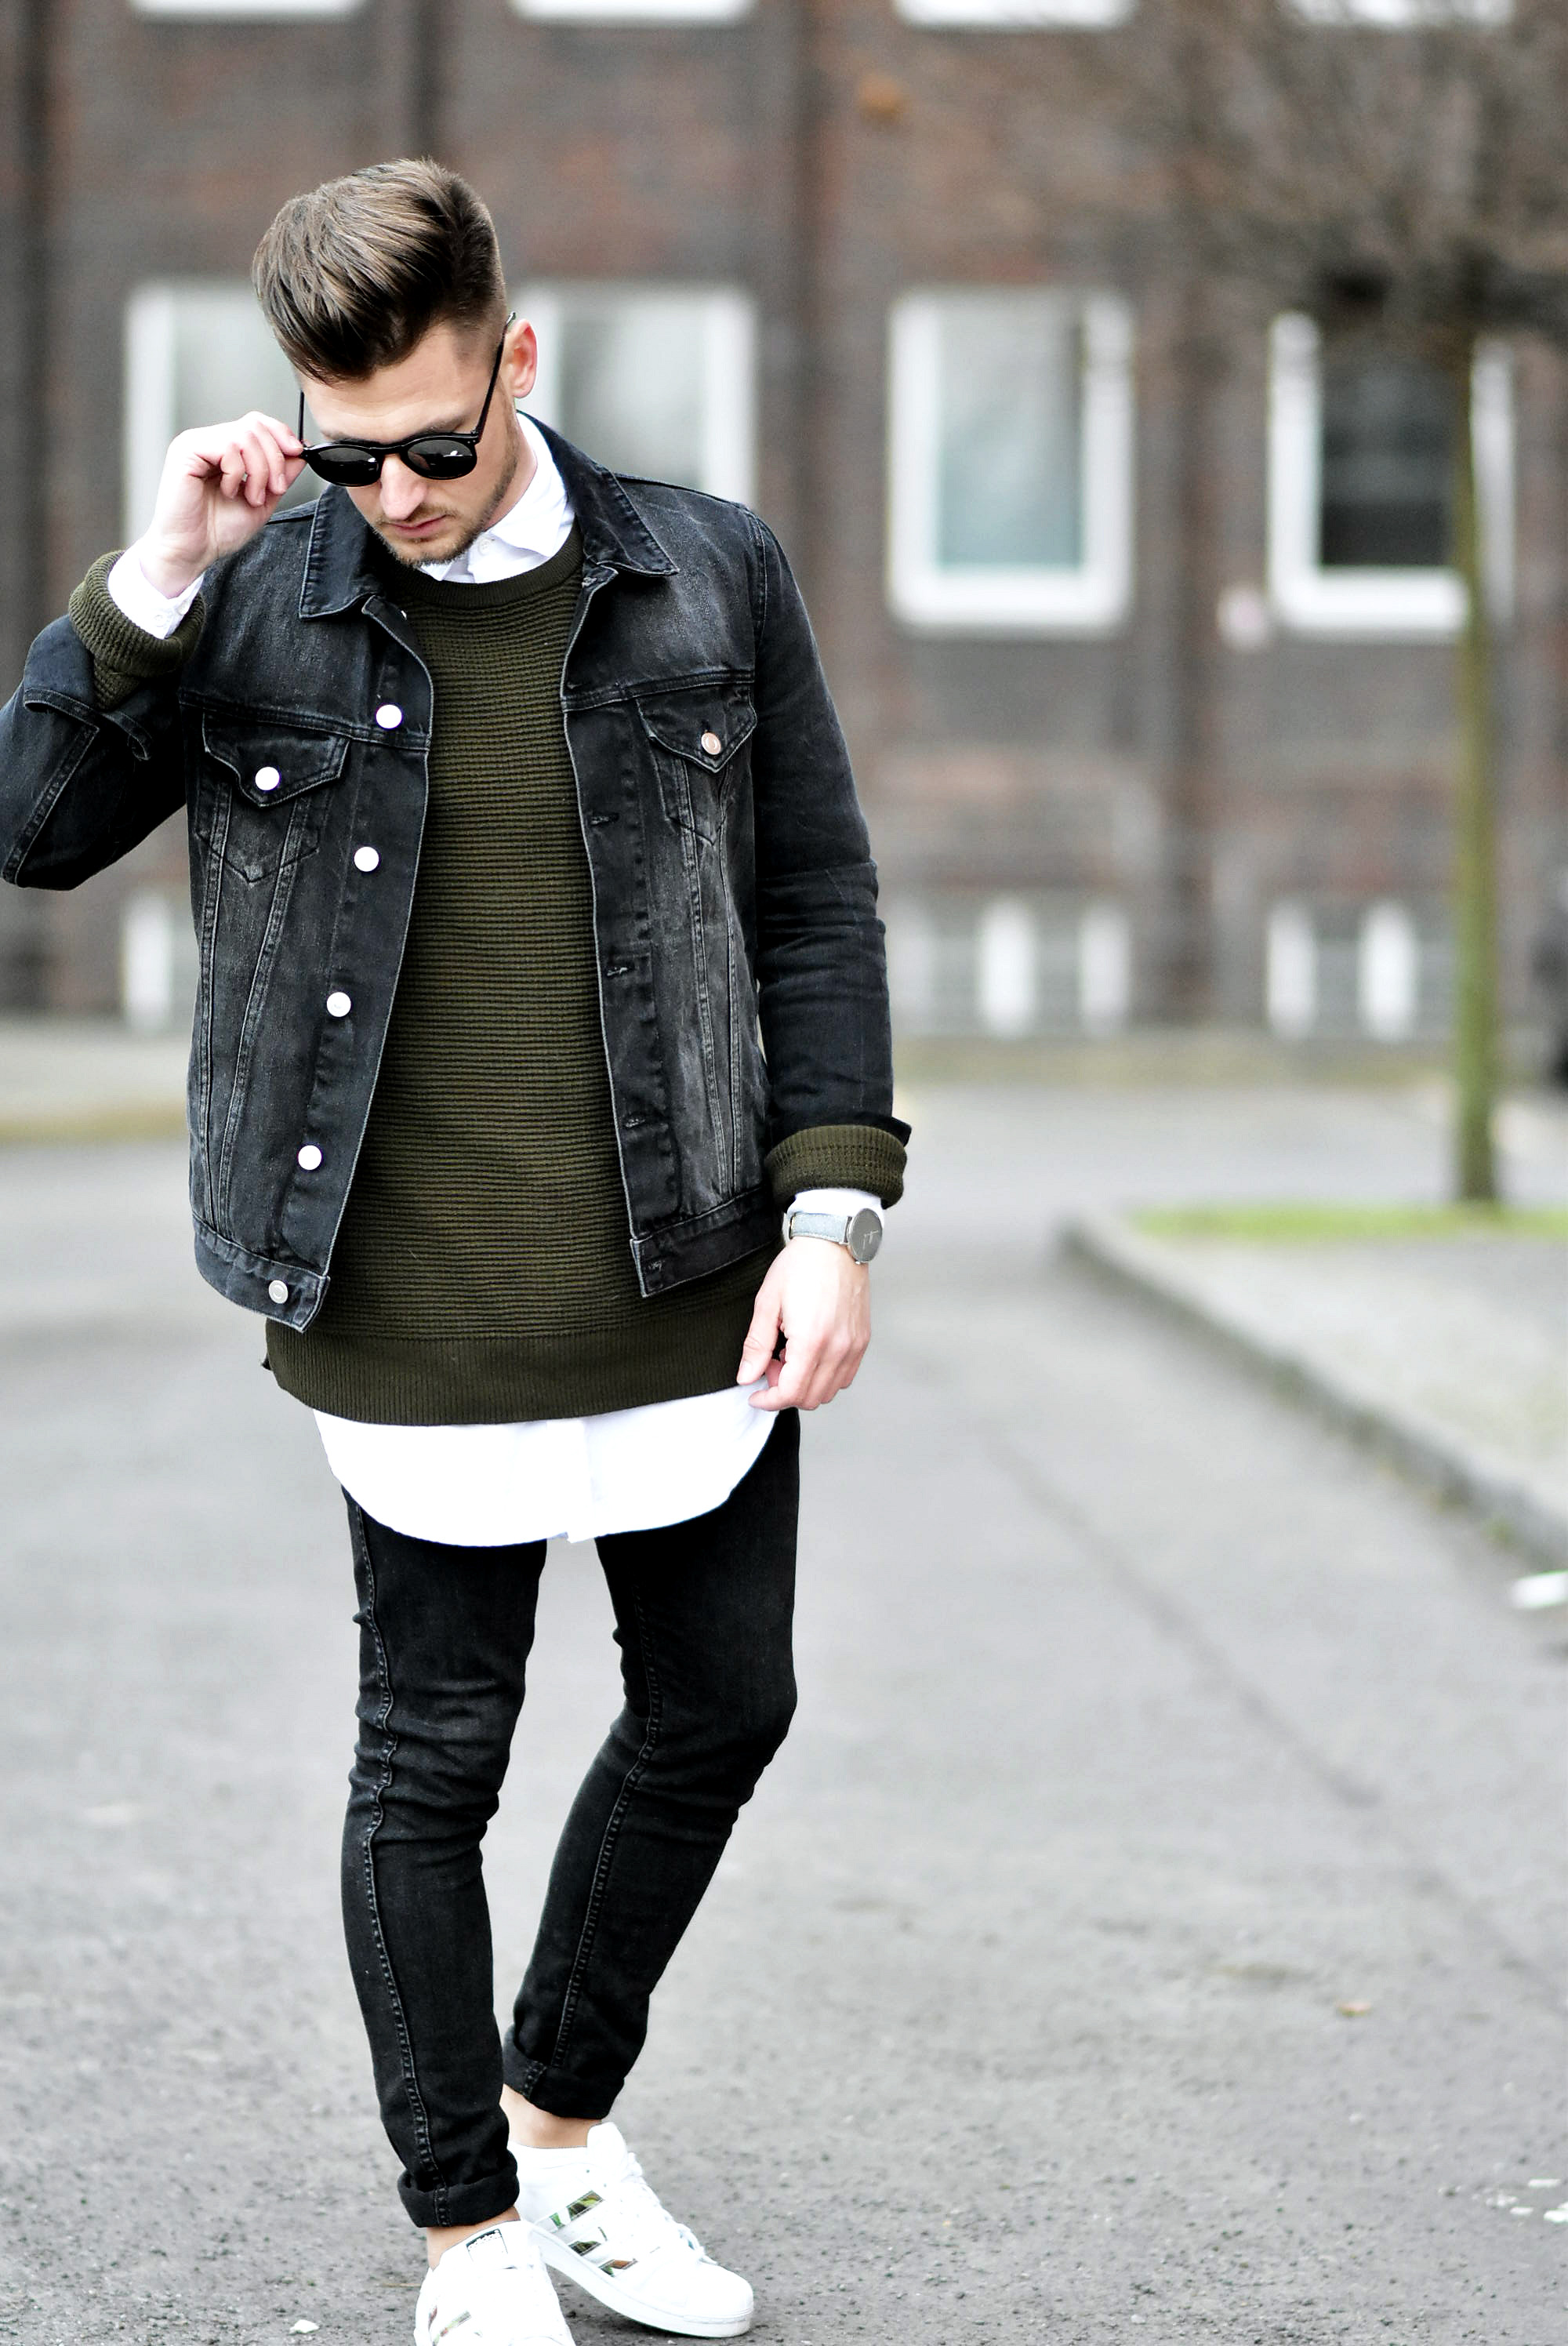 Tommeezjerry-Styleblog-Männerblog-Männer-Modeblog-Berlin-Berlinblog-Outfit-Streetlook-Skinny-Jeans-Oversized-Shirt-Khaki-Sweater-Jeansjacke-Adidas-Superstar-Schwarze-Sonnenbrille-Frühlingslook-Friday-Dapper